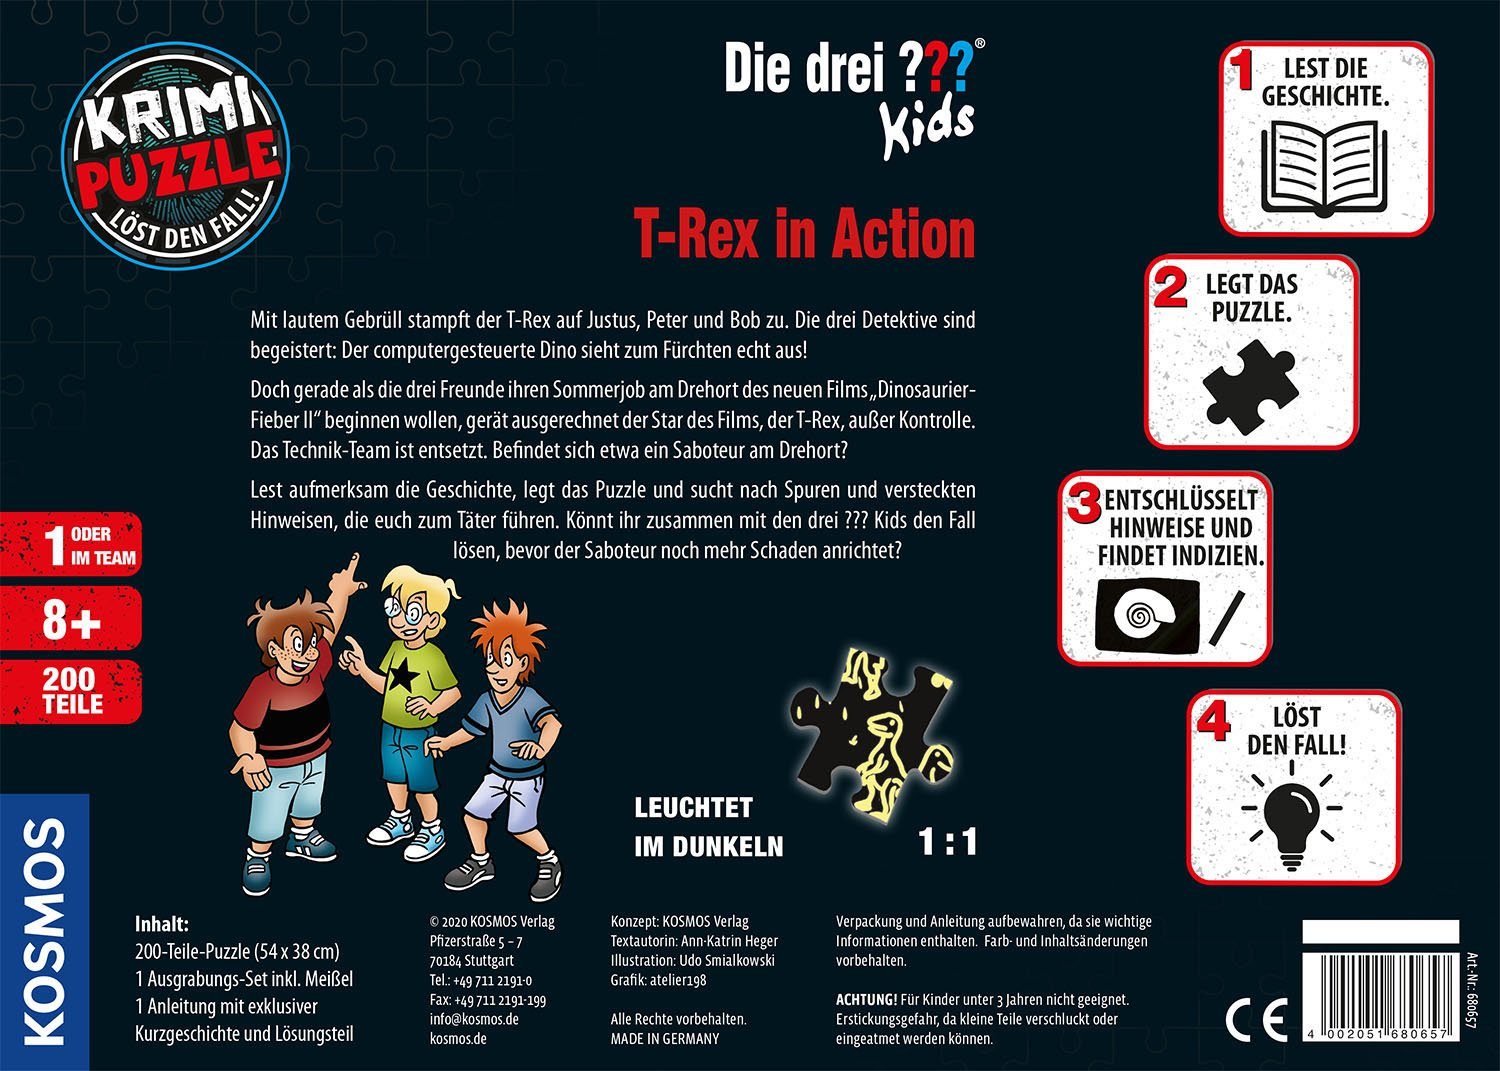 Made Krimipuzzle Germany 200 Puzzle Die Action, in Kids T-Rex in Puzzleteile, drei ??? Kosmos